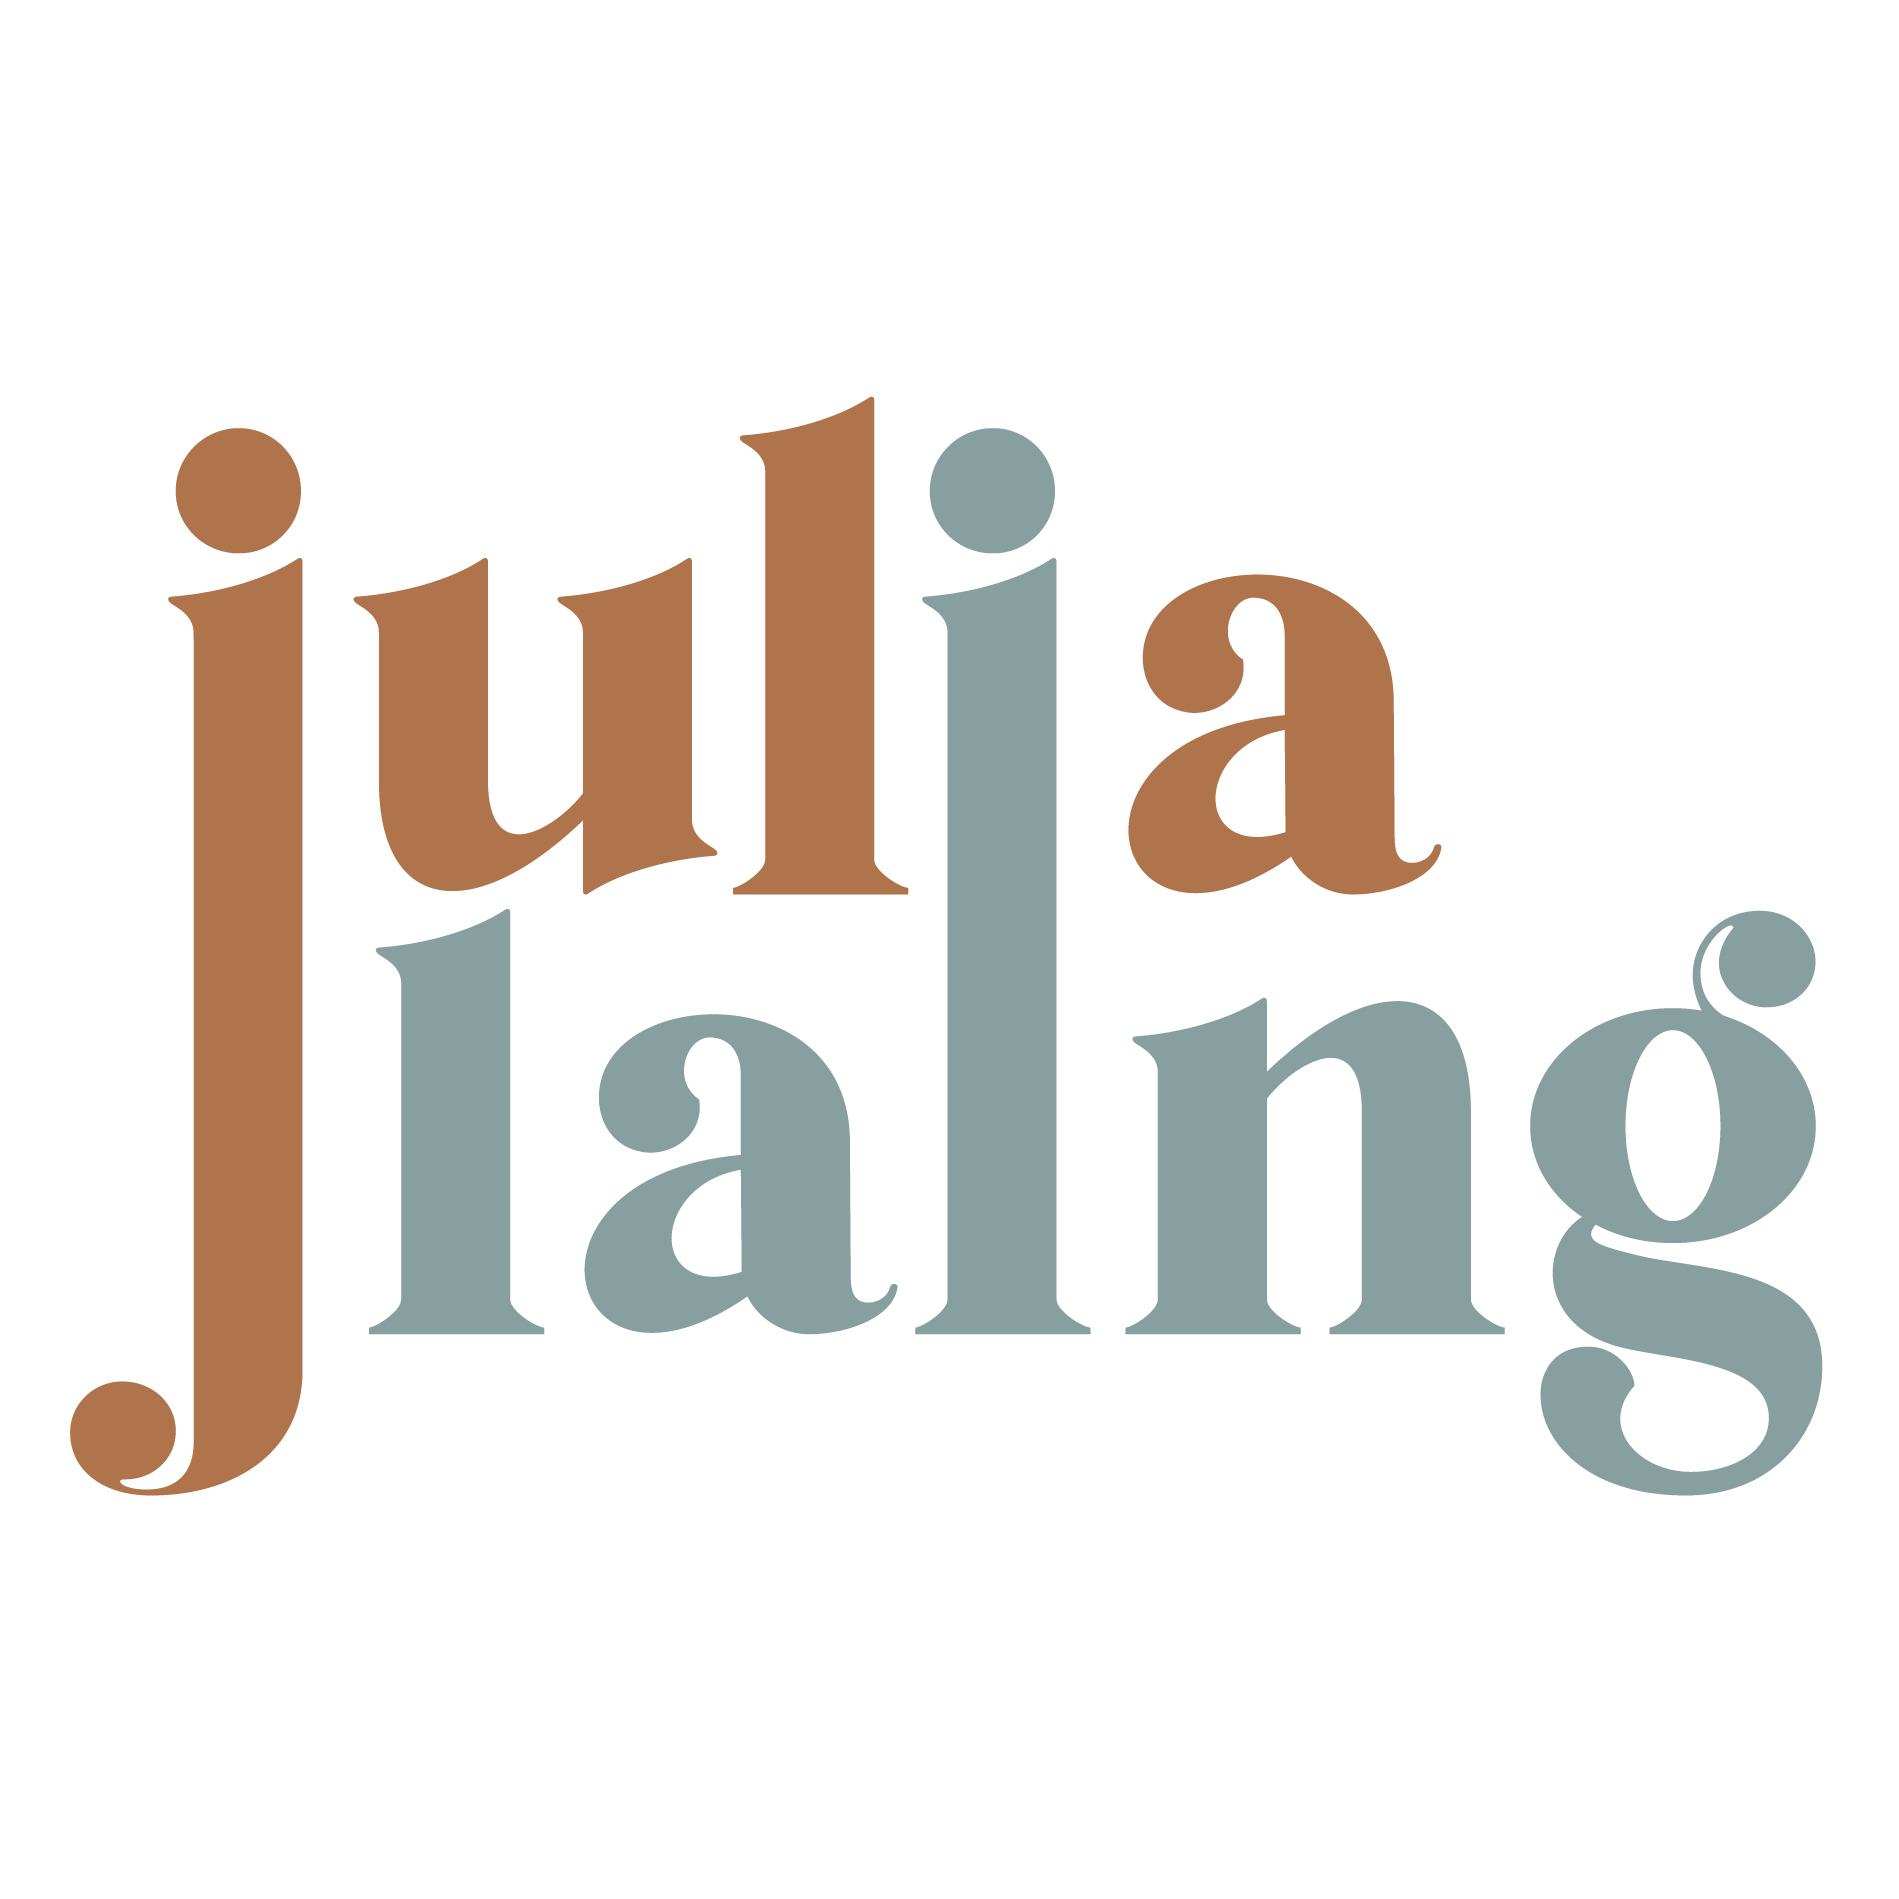 Julia Laing